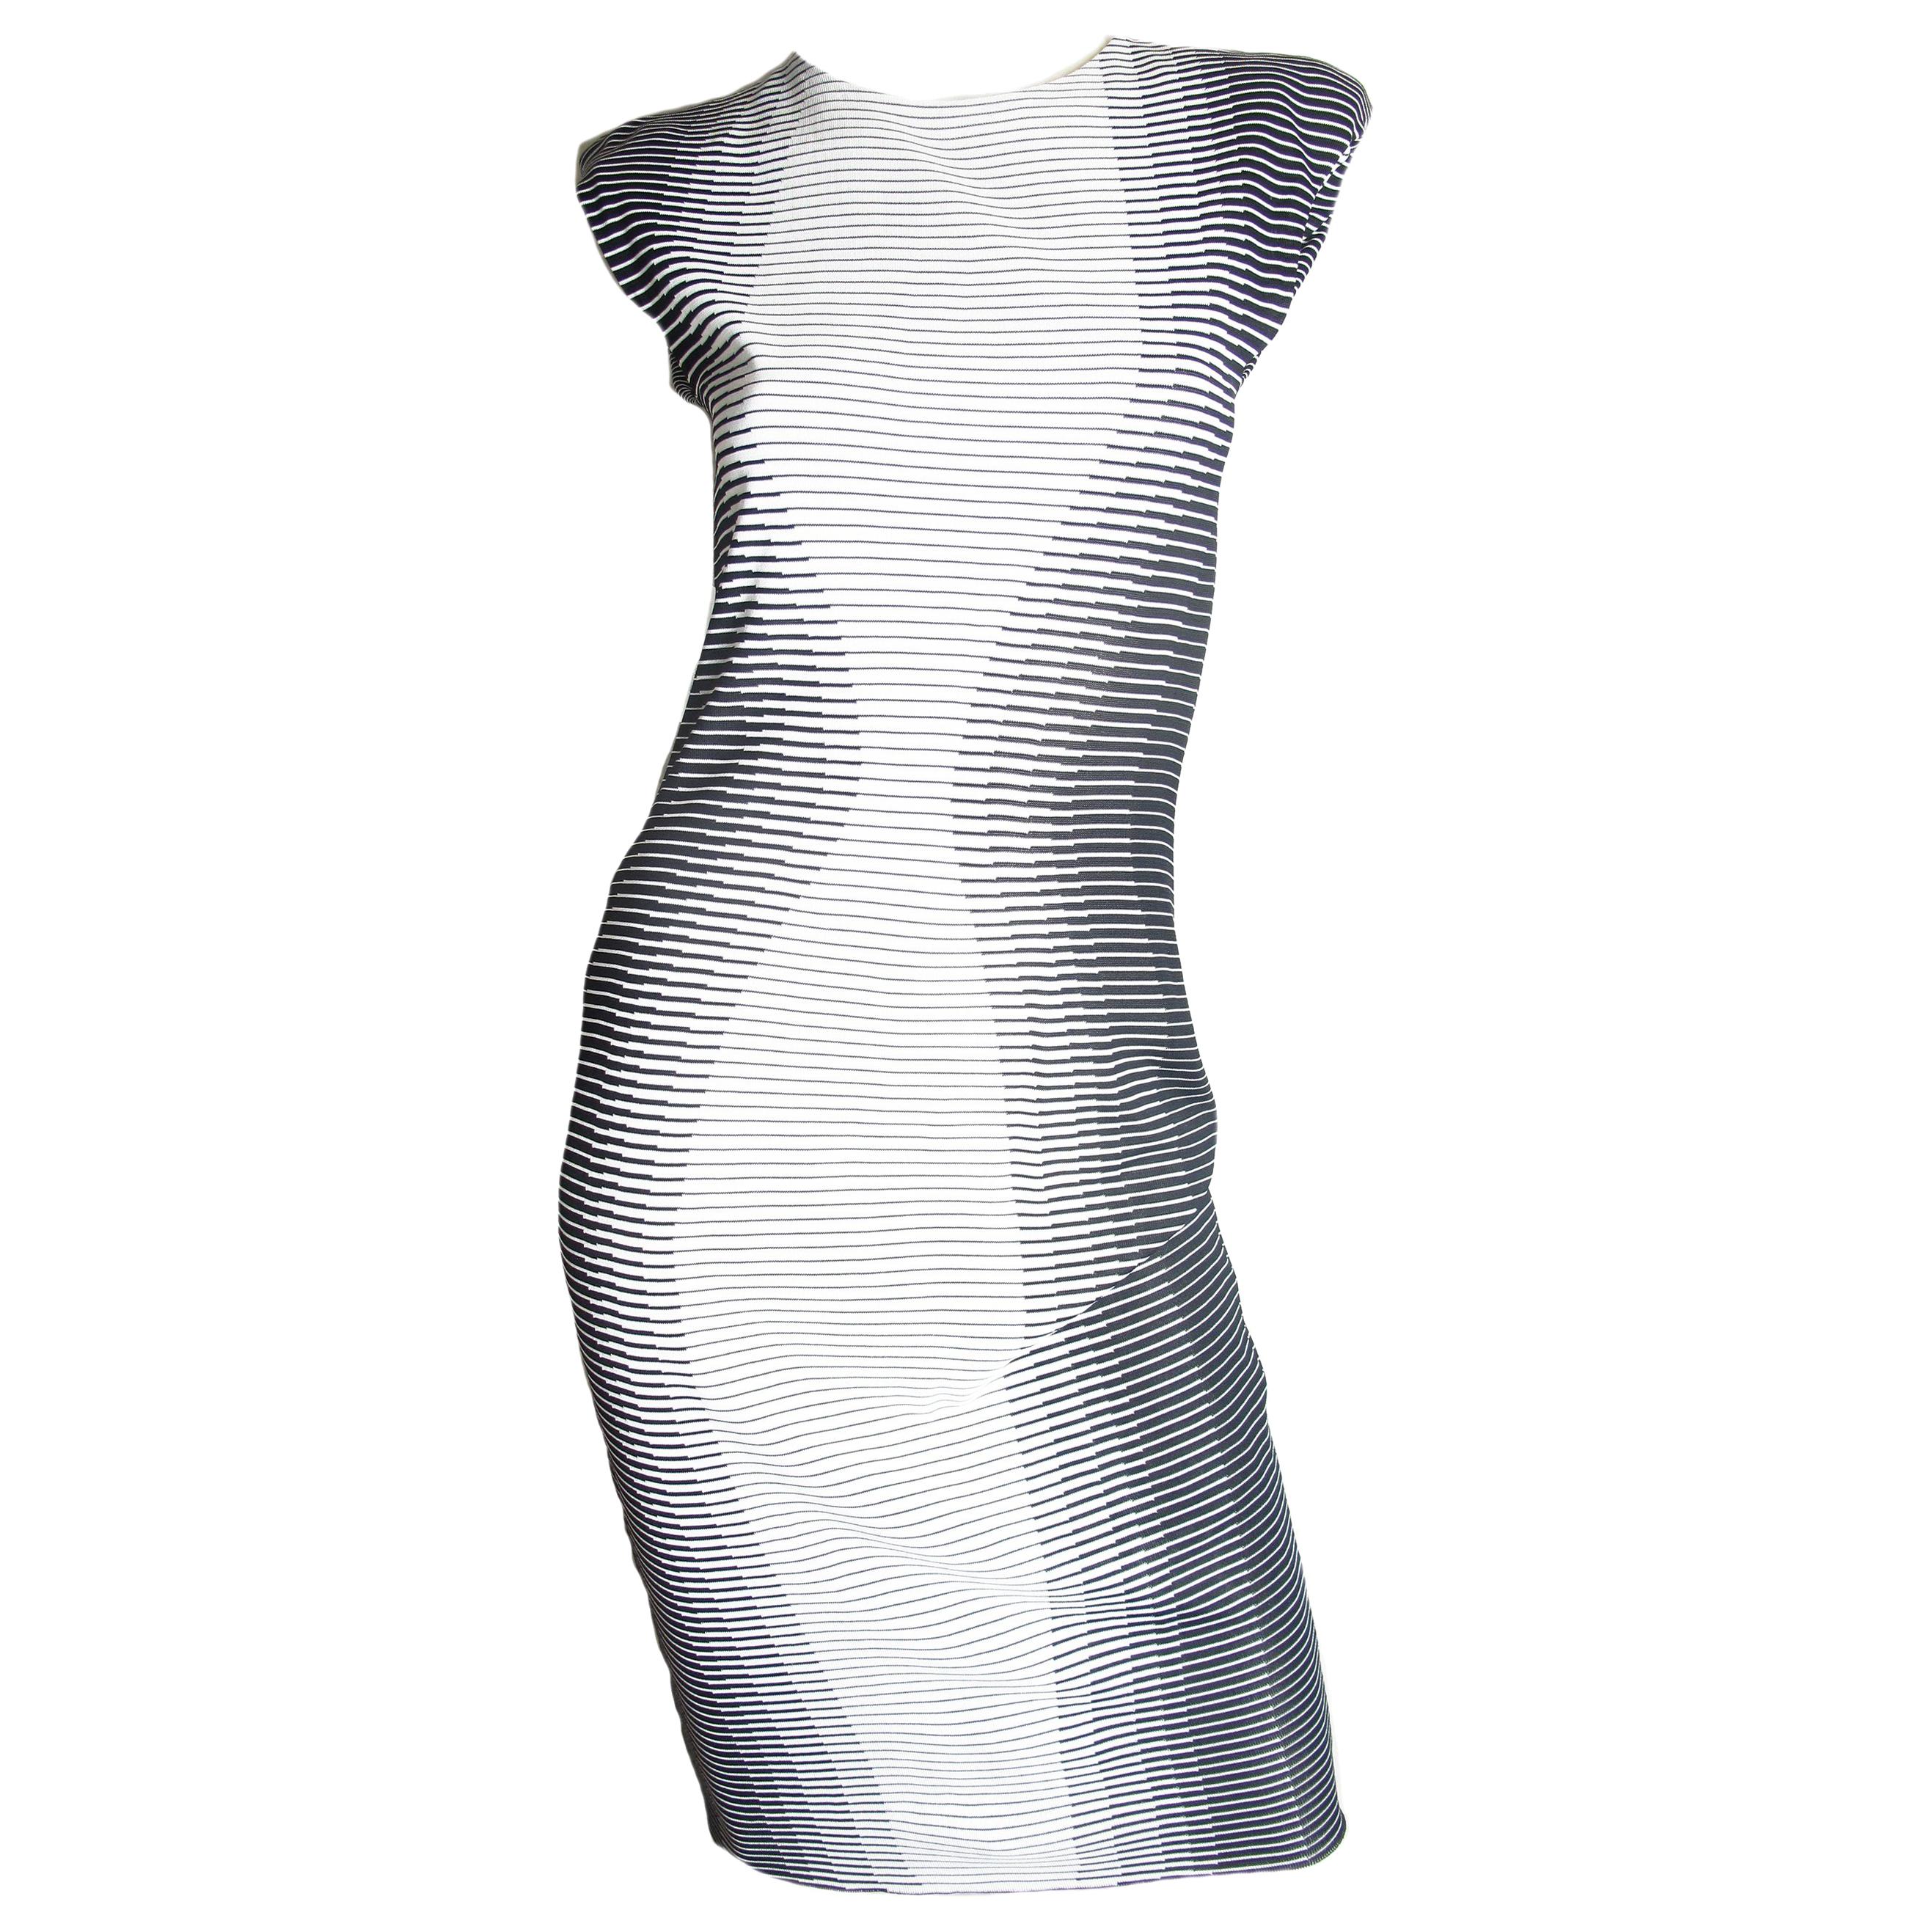 Alexander McQueen 2009 Optical Illusion Striped Dress Runway